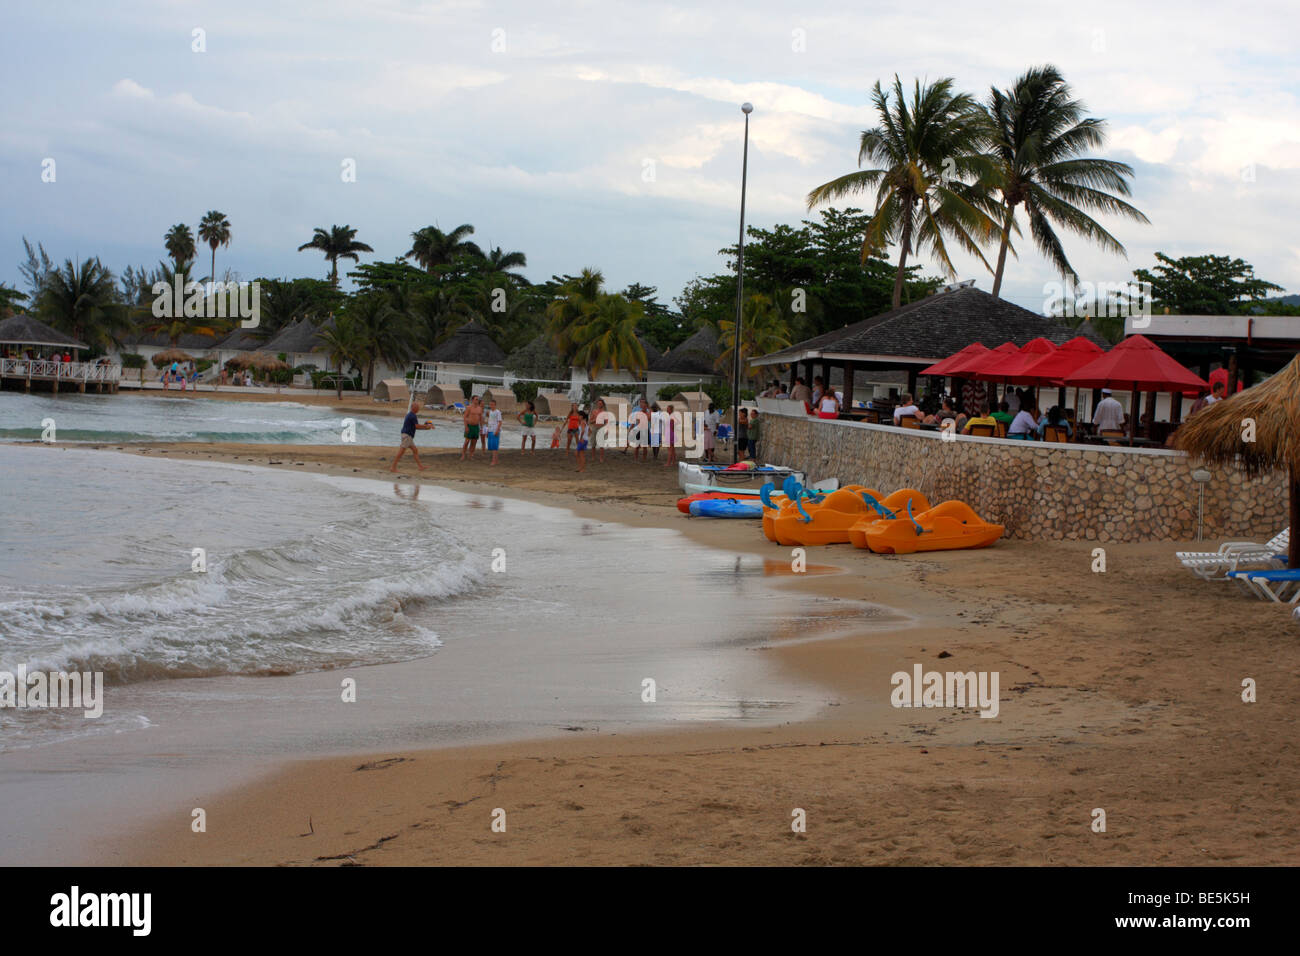 Beach sand volleyball game at Royal Decameron Caribbean resort, Runaway Bay, Jamaica Stock Photo